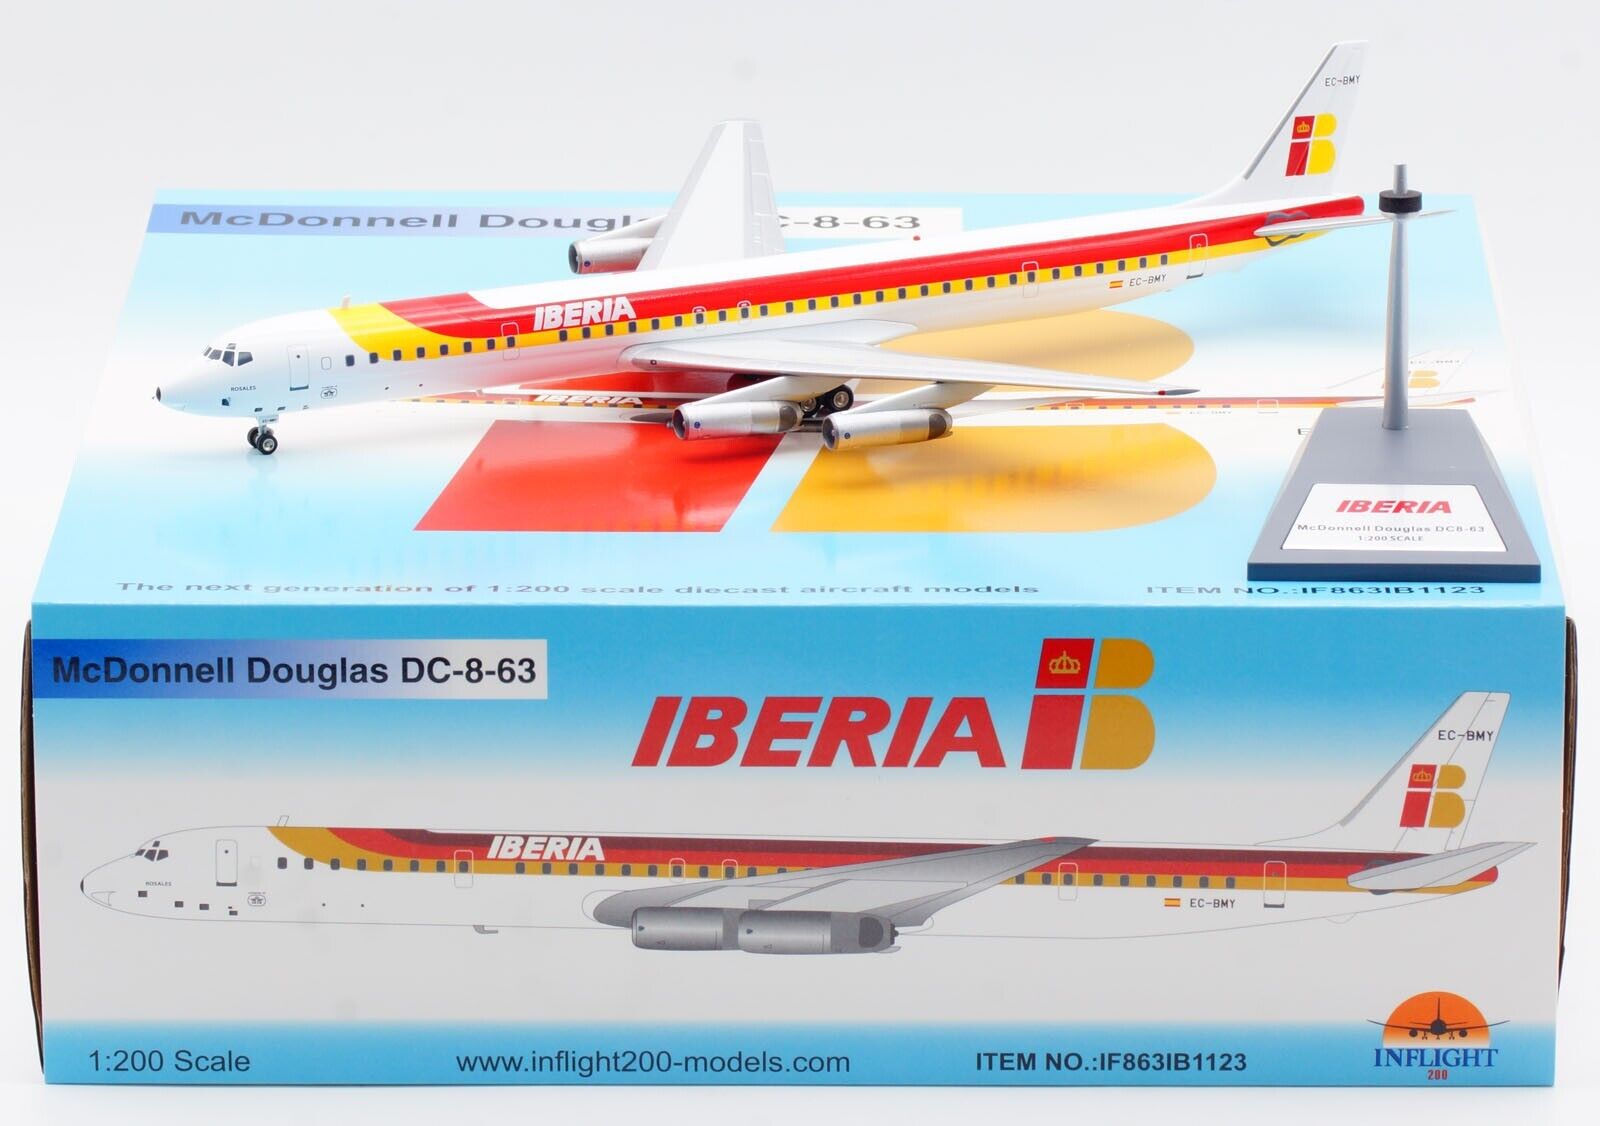 INFLIGHT 1:200 Iberia McDonnell Douglas DC-8-63 Diecast Aircraft Model EC-BMY